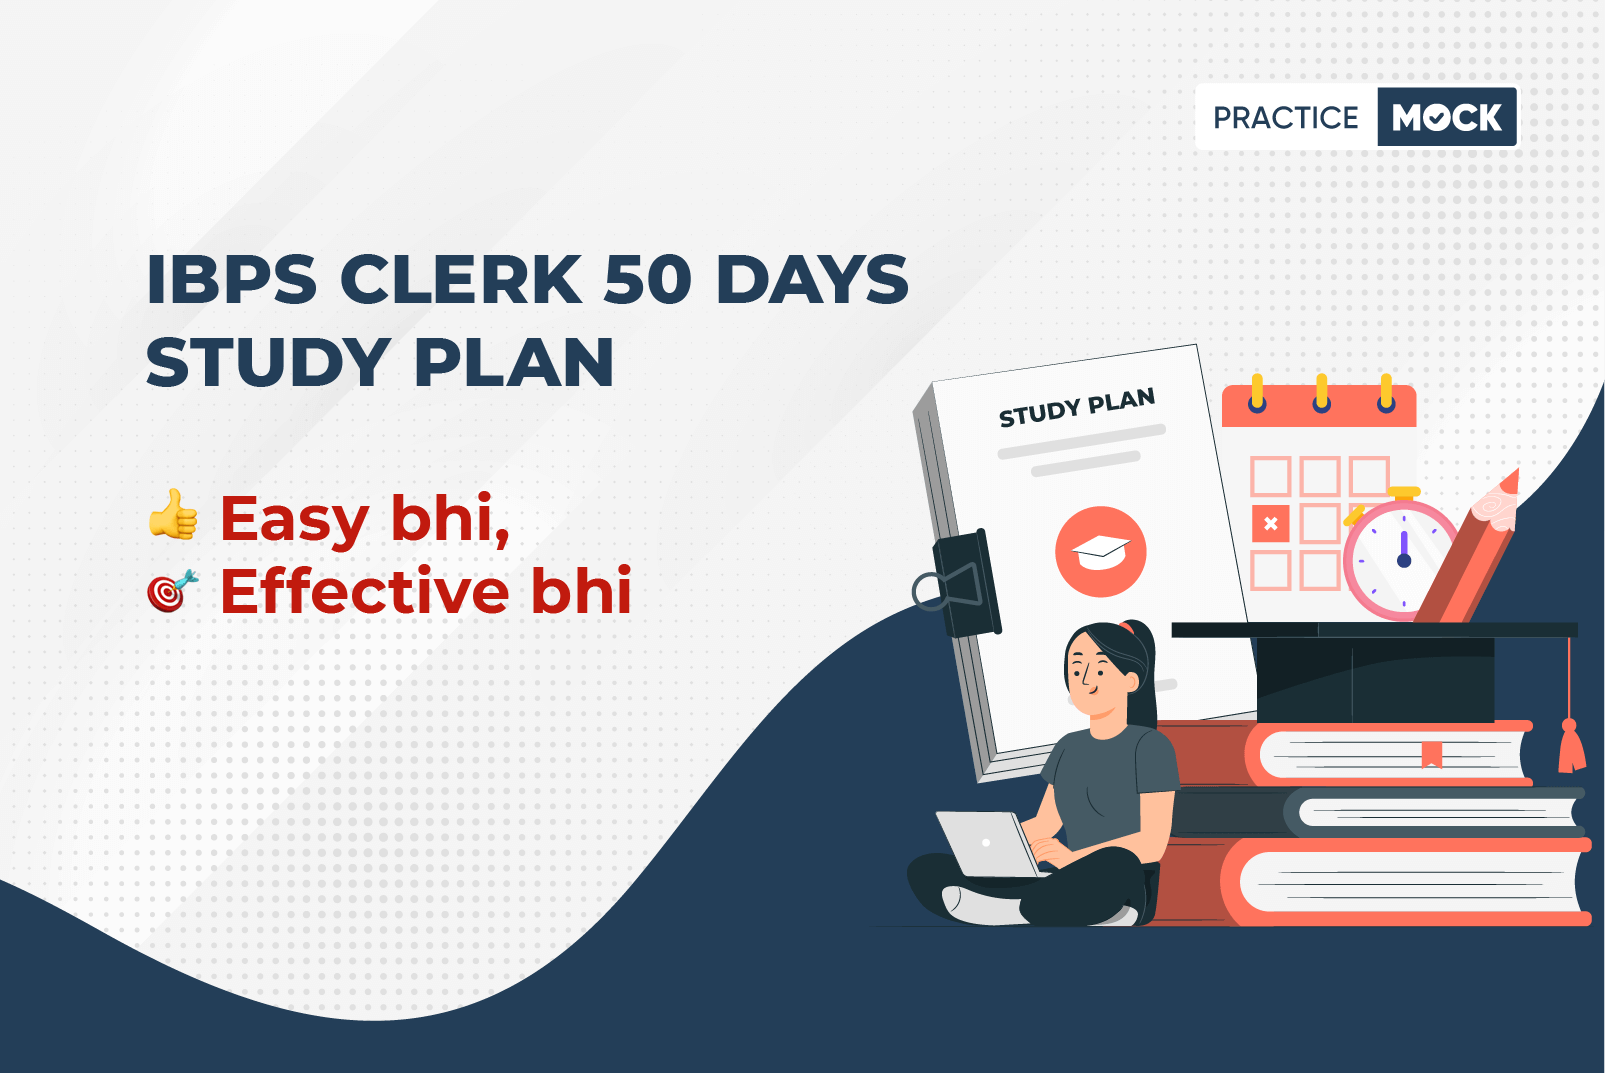 IBPS Clerk 50 Days Study Plan